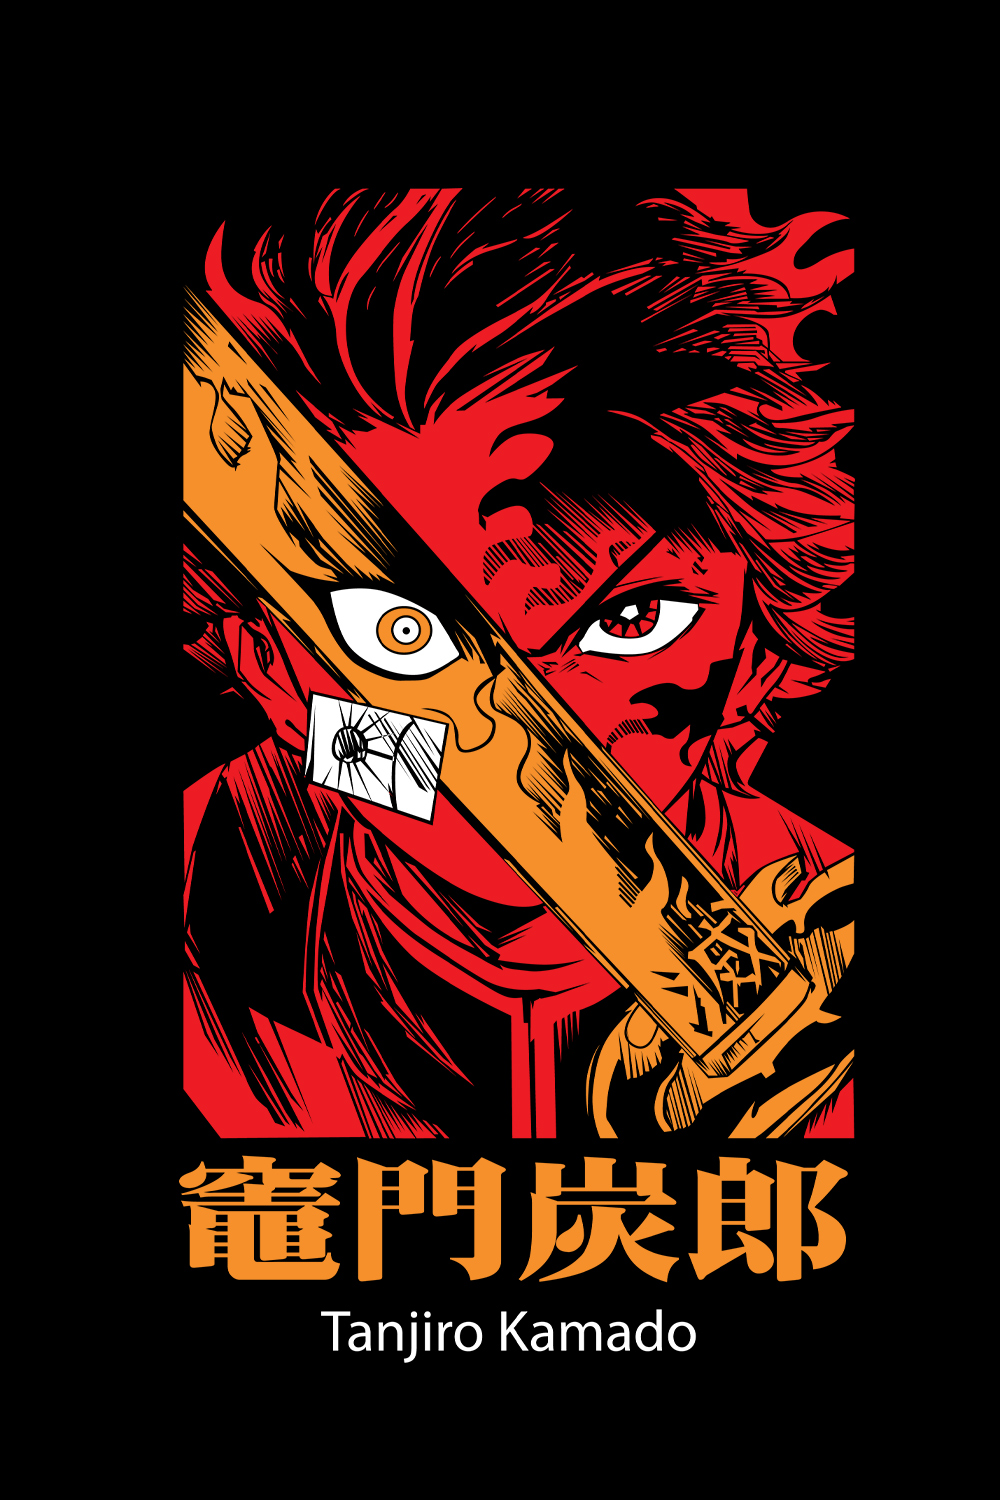 Tanjiro Kamado Anime t-shirt design pinterest preview image.